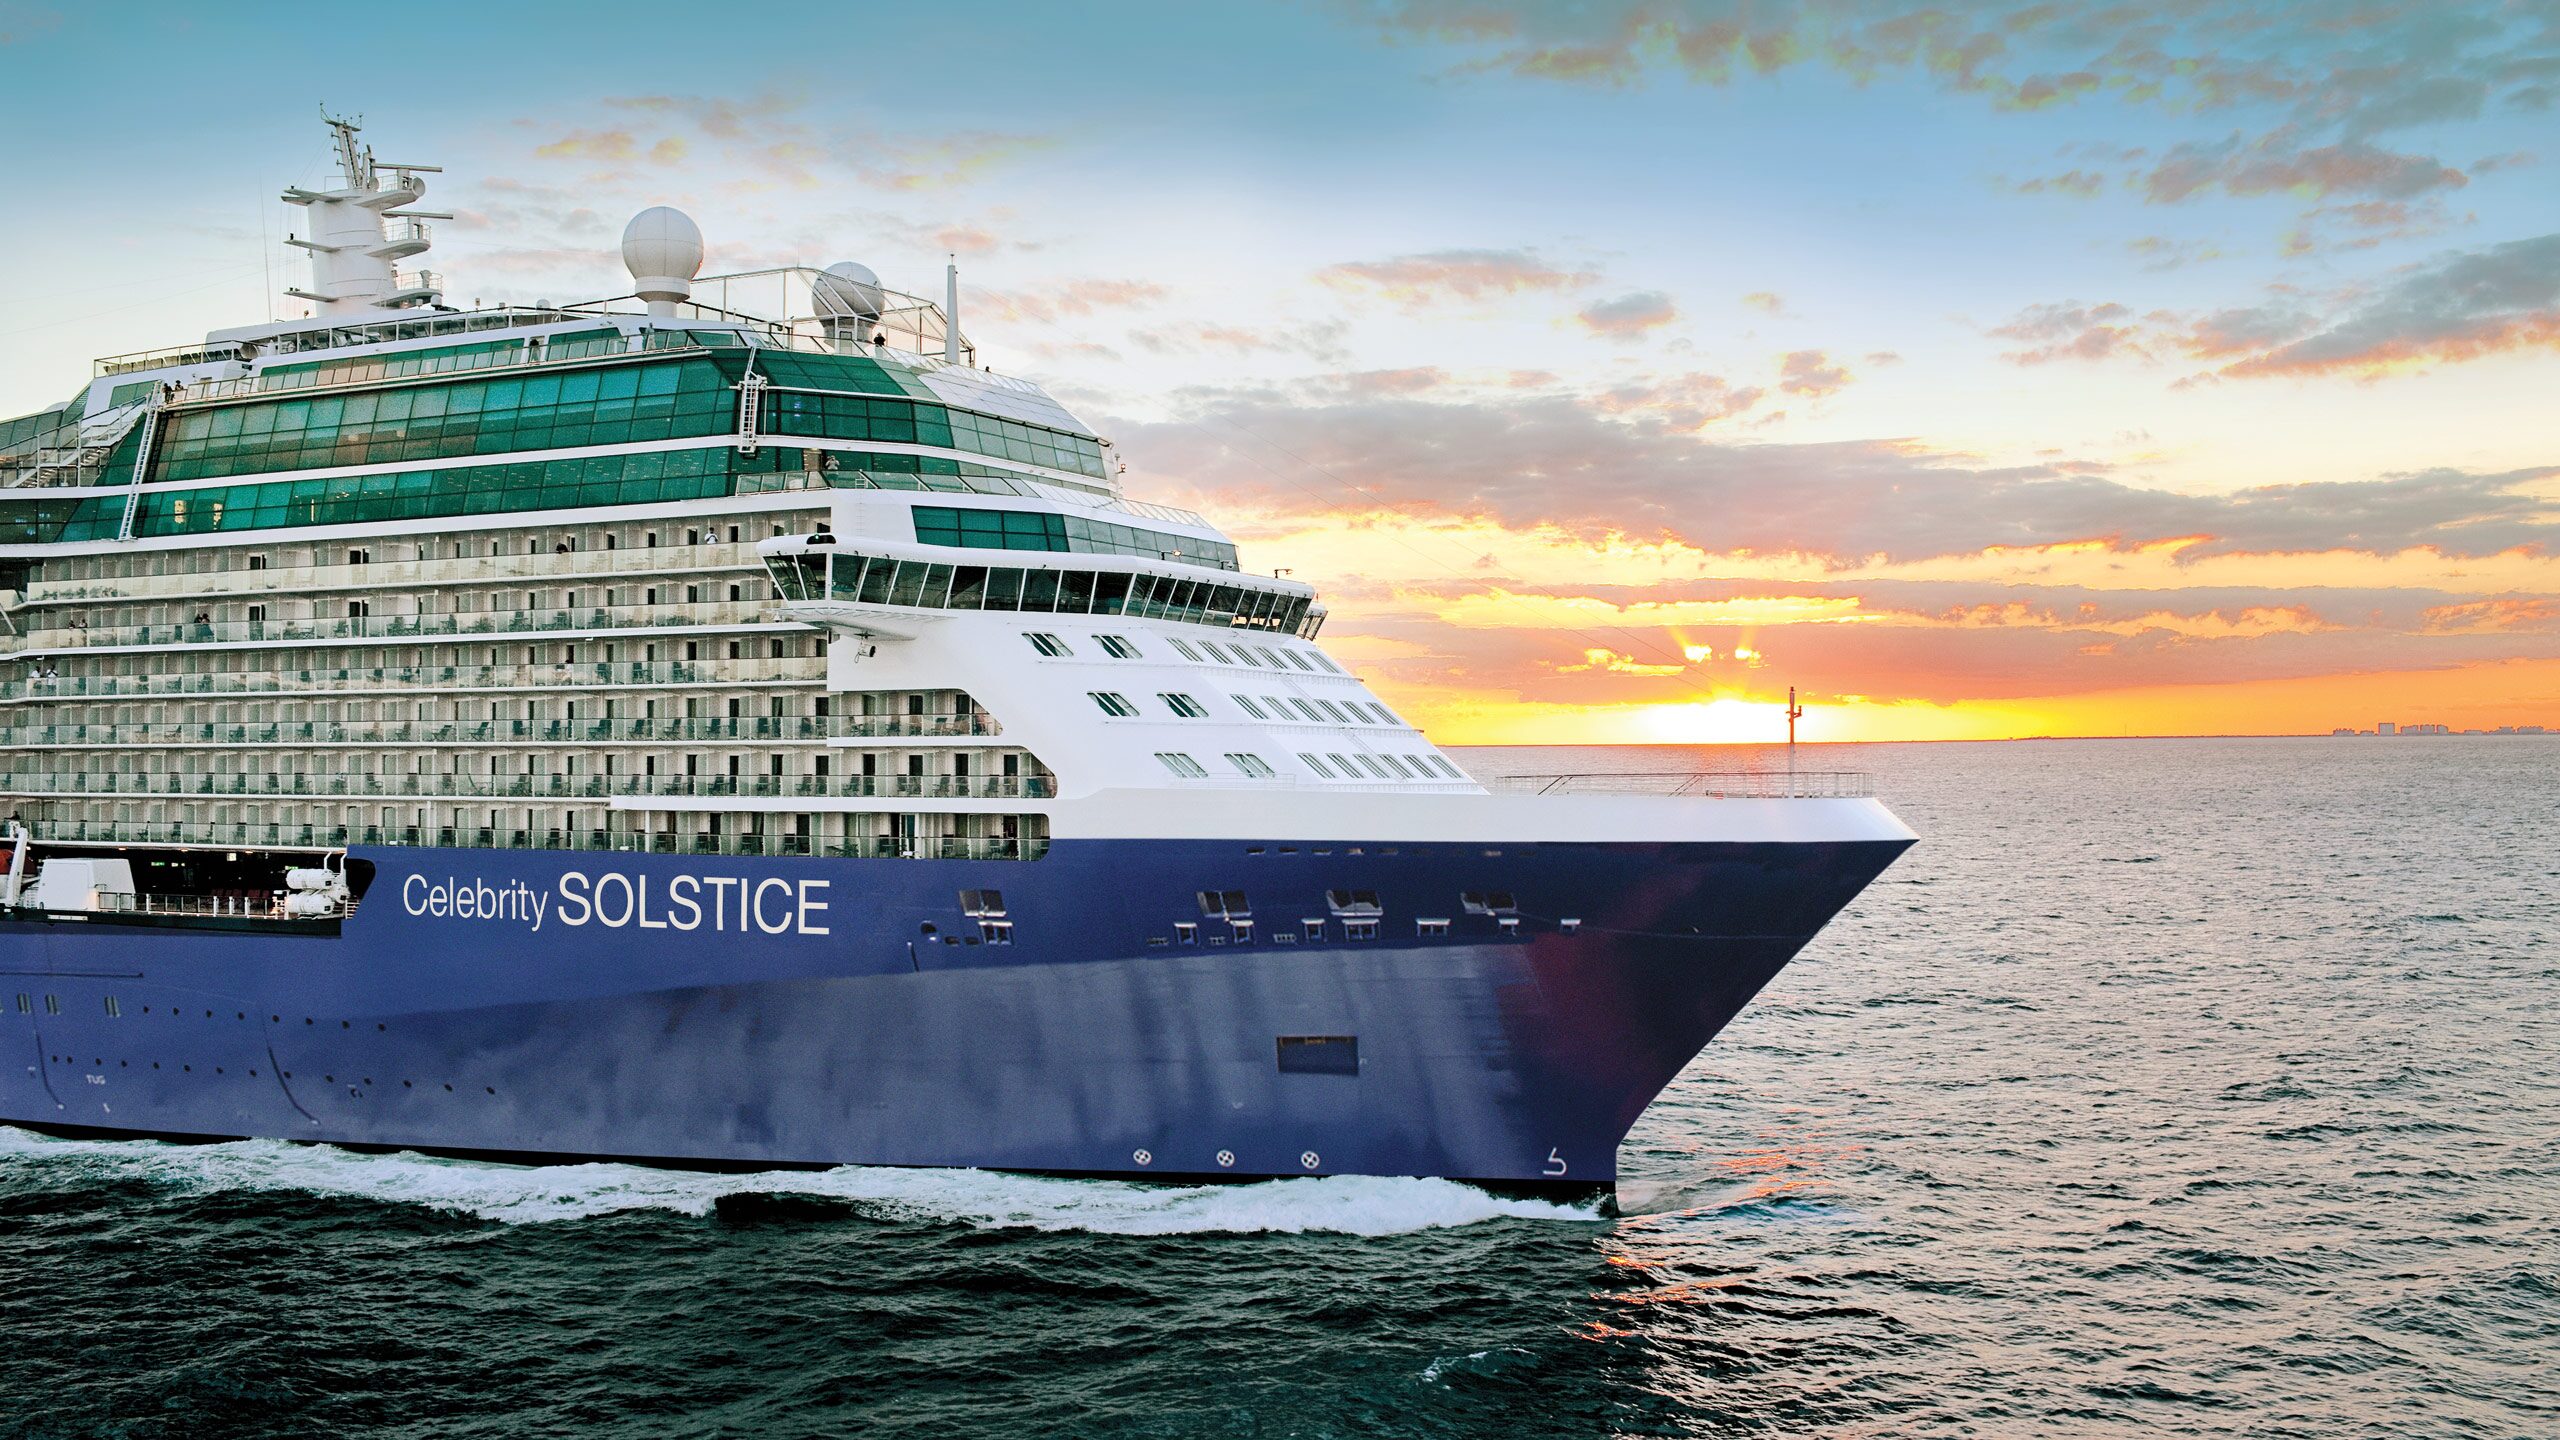 Celebrity Solstice Deck Plan & Amenities Celebrity Cruises United